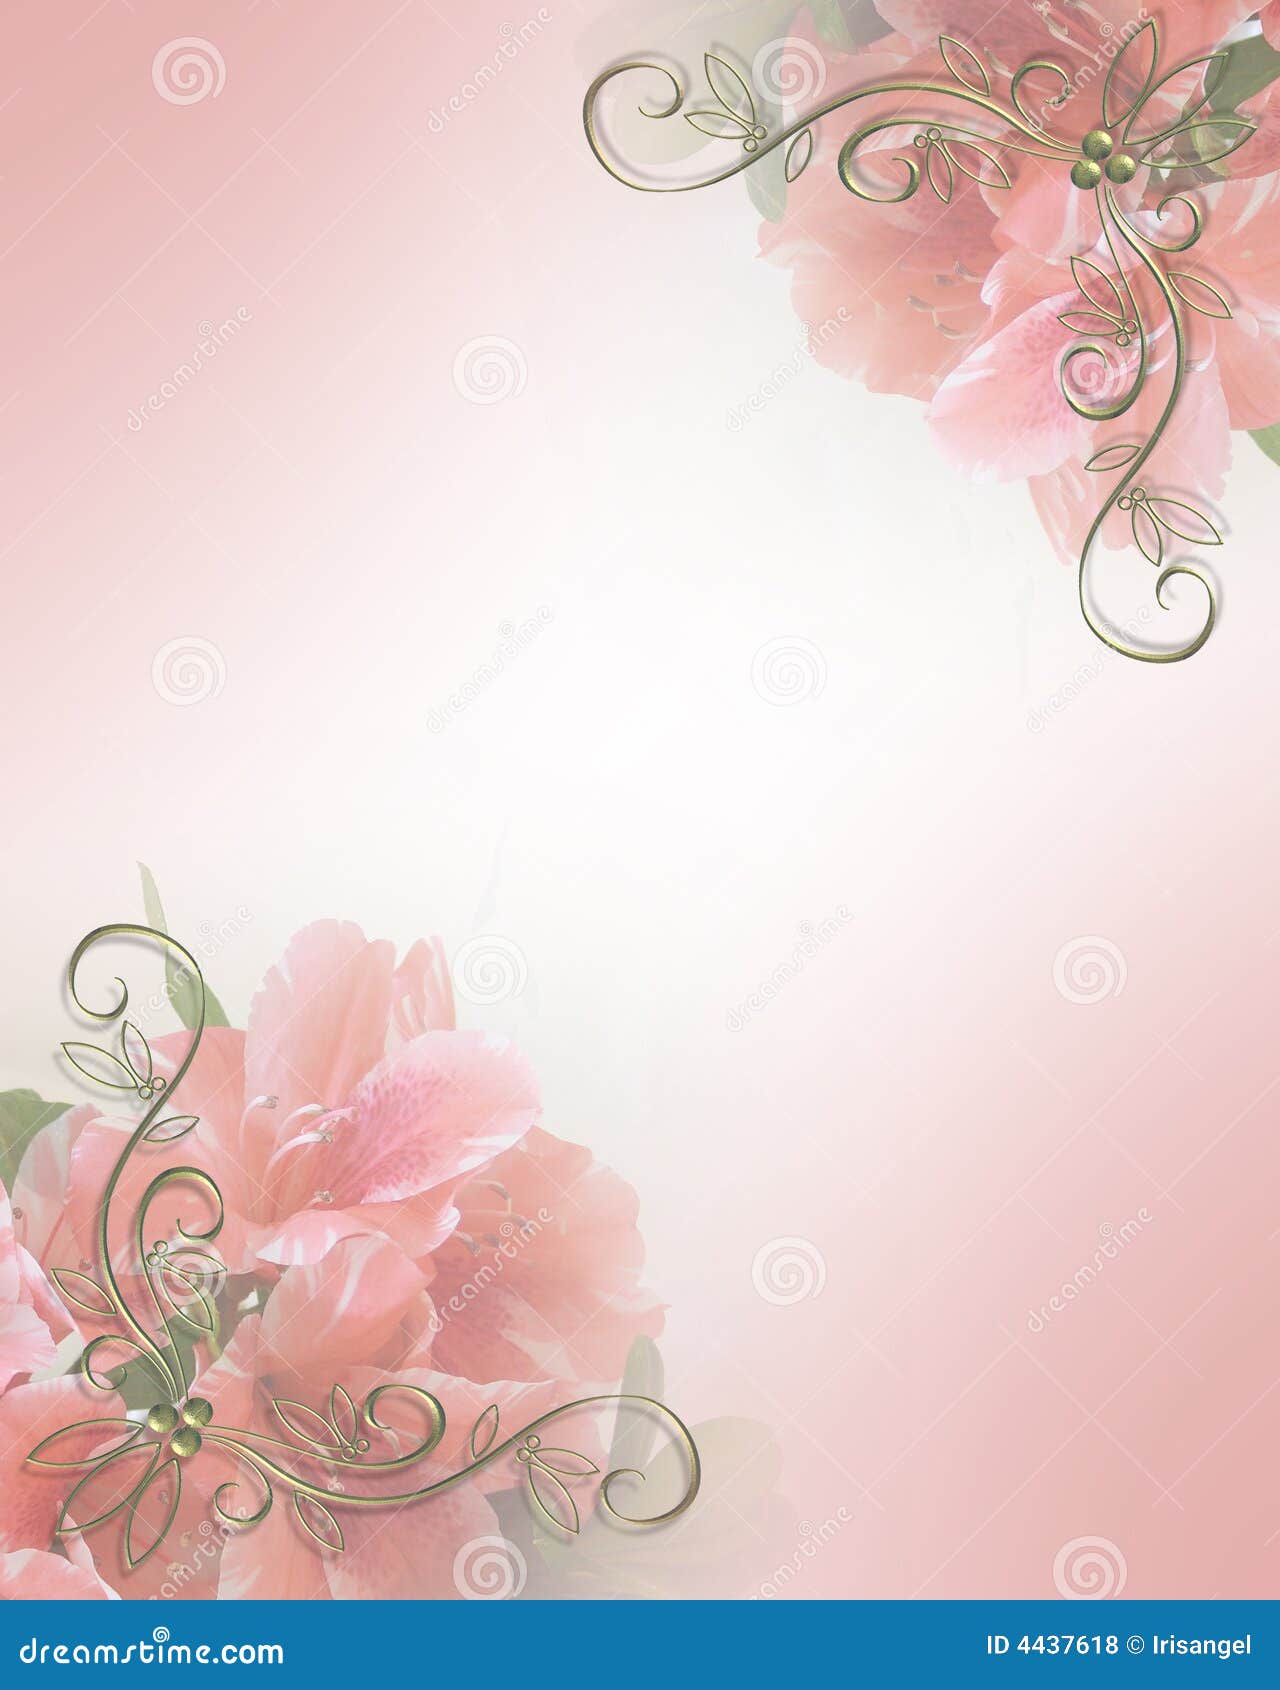 Pink flower wedding invitations